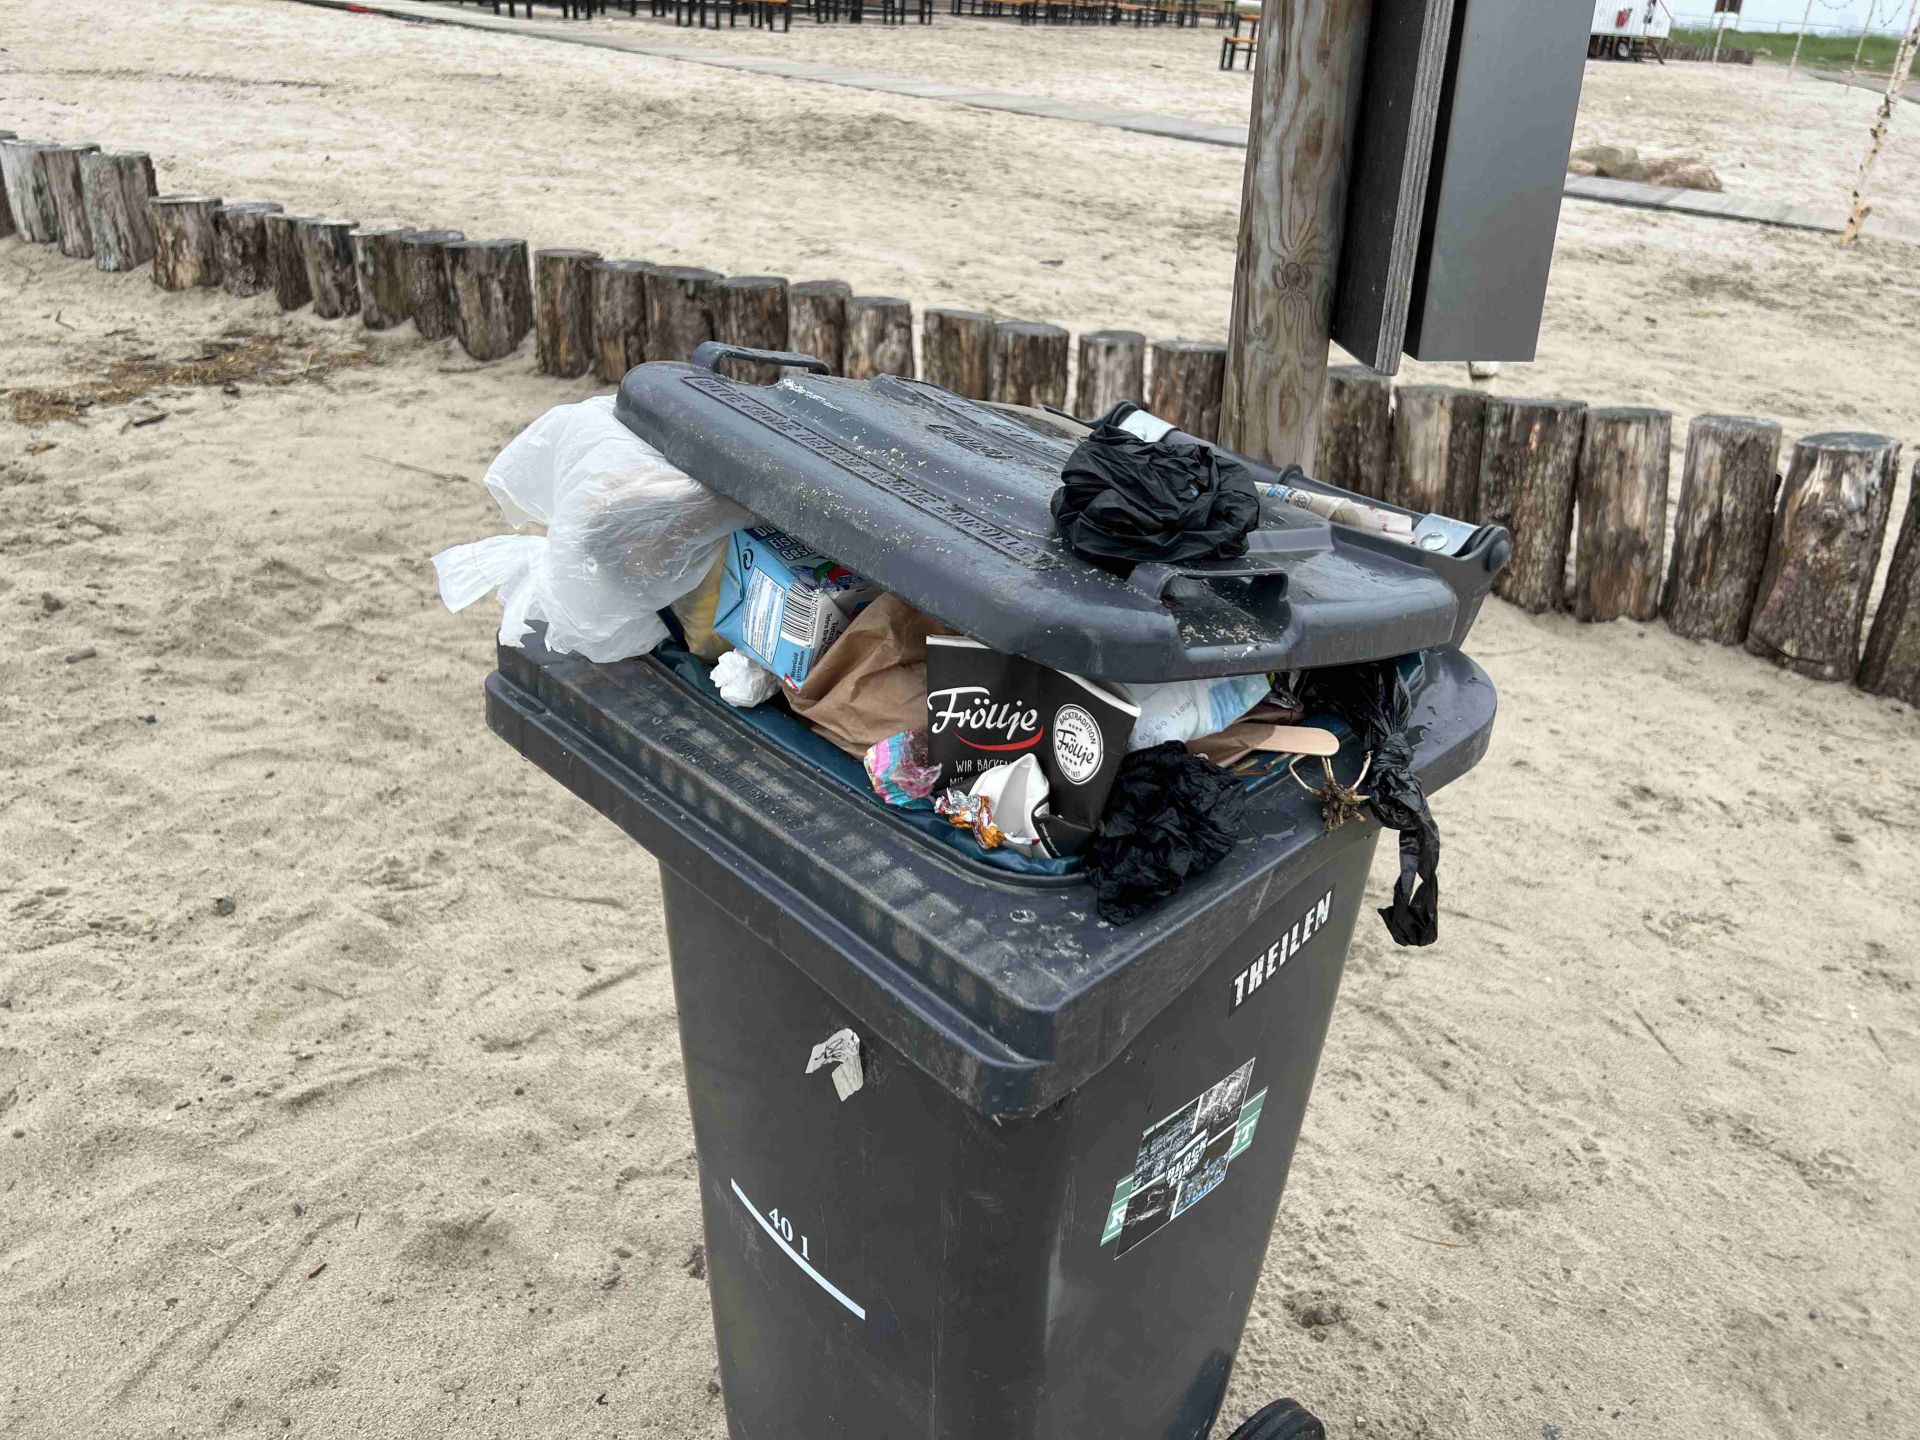 überfüllte Mülltonne am Strand